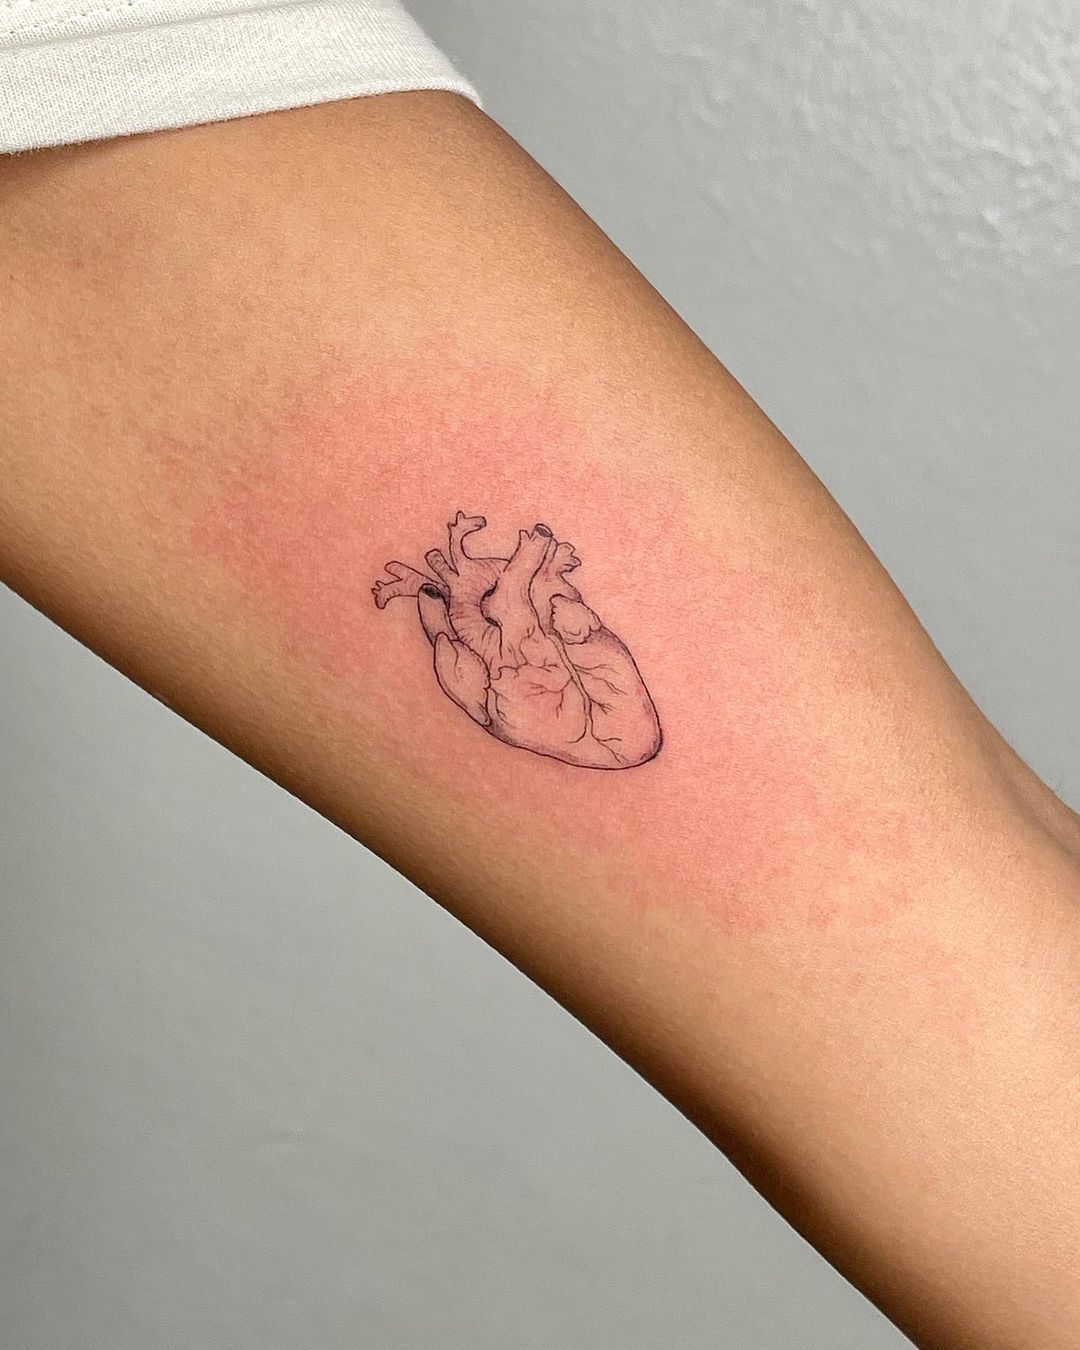 Heart tattoo design by reinostorm